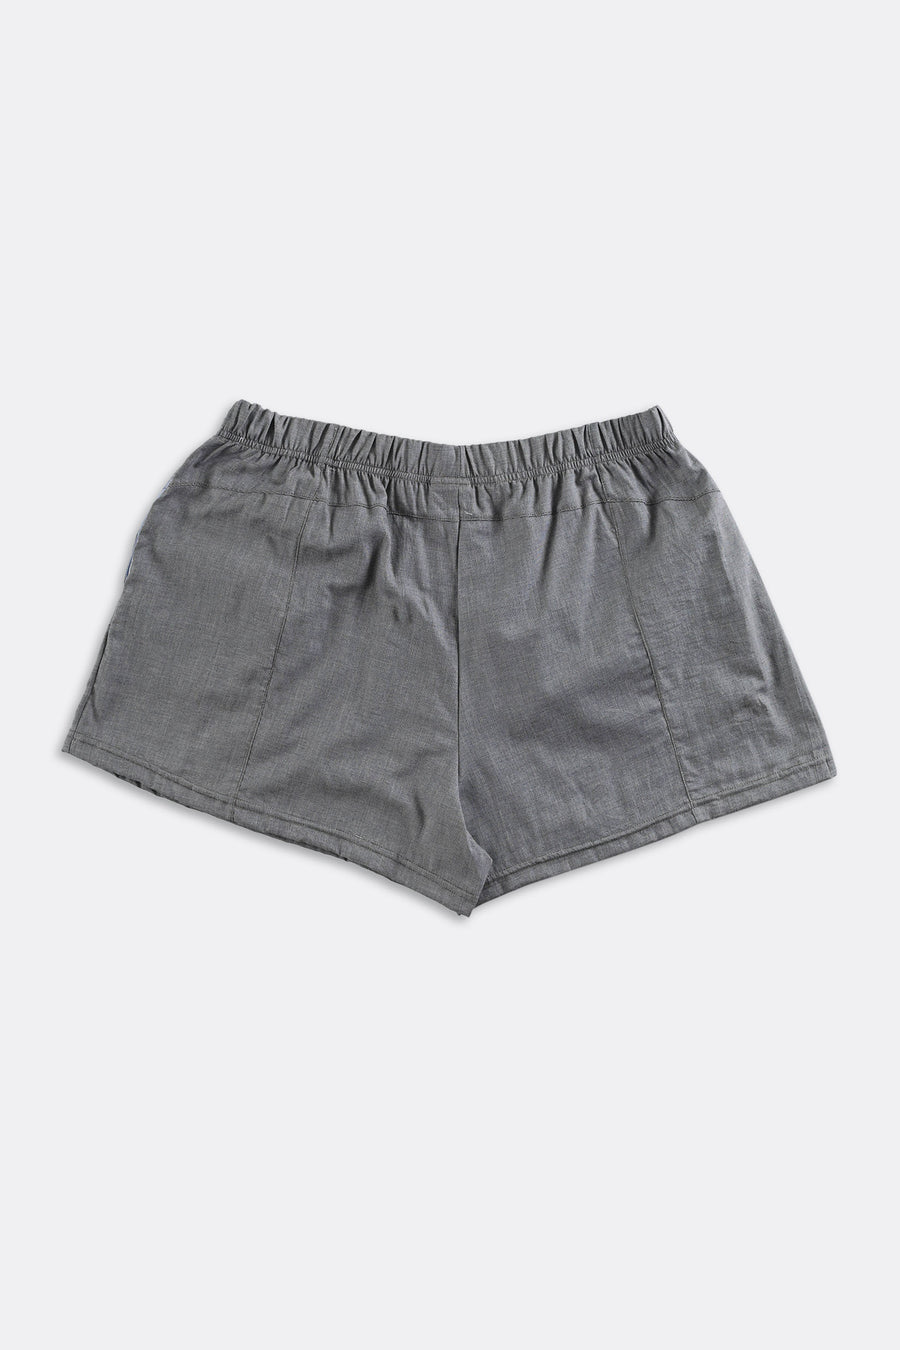 Rework Oxford Mini Boxer Shorts - 3XL